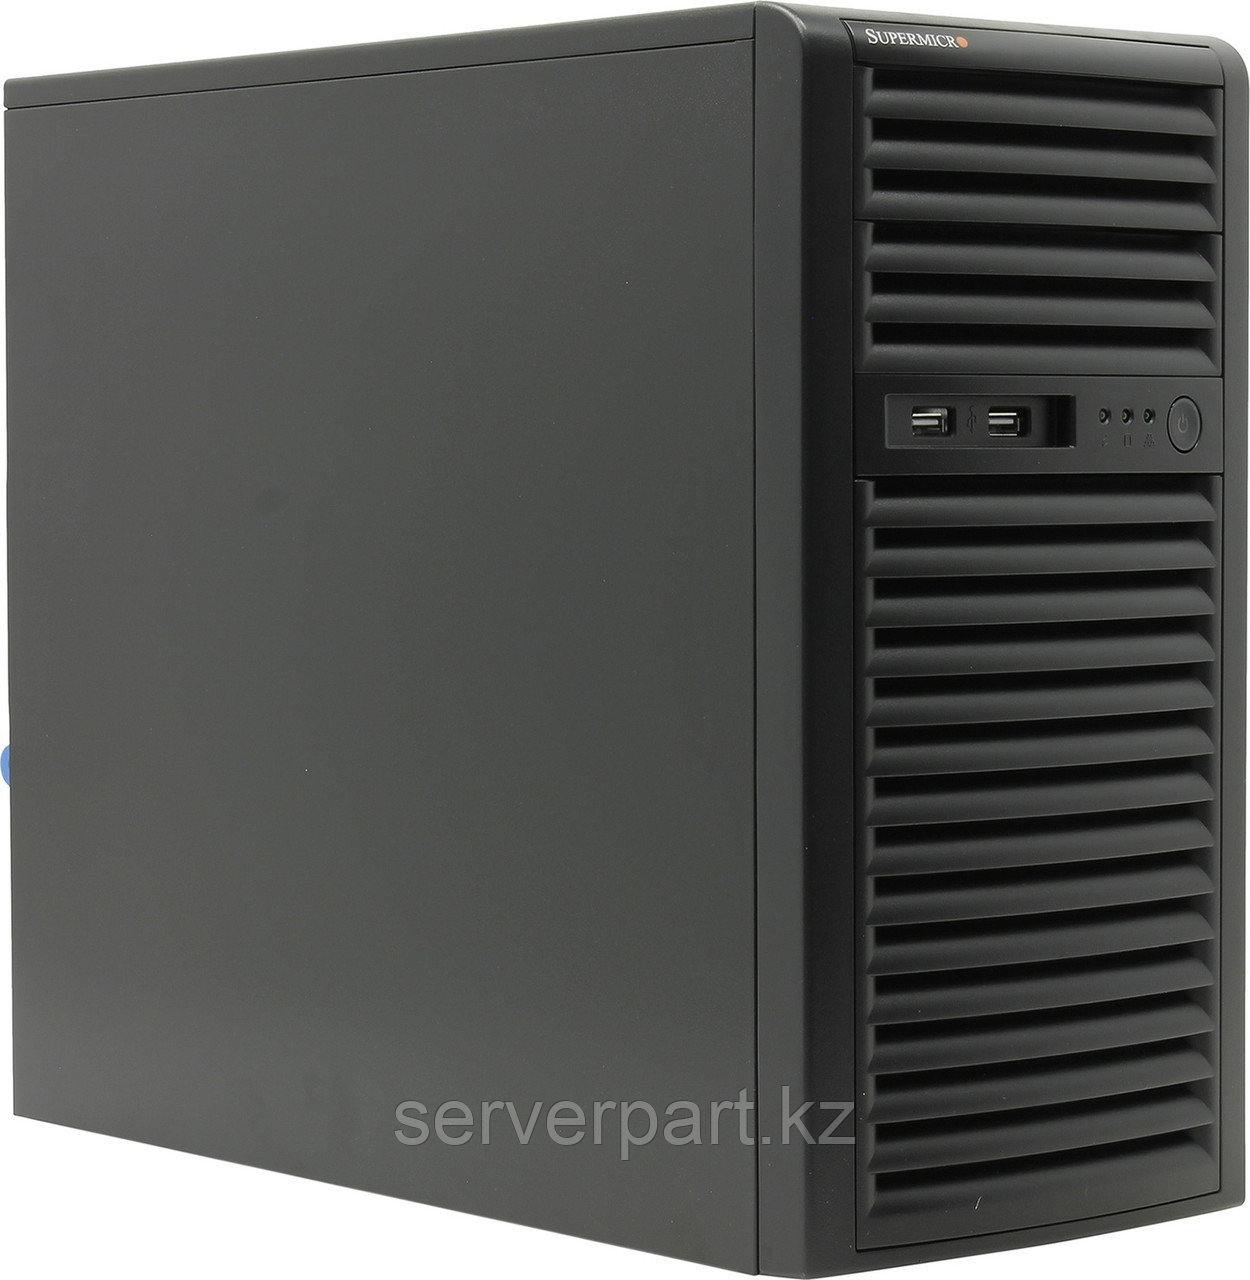 Сервер Supermicro SYS-5039C Tower 4LFF/4-core intel xeon E2124 3.3GHz/48GB UDIMM nECC/1x480GB SSD MU Hyb